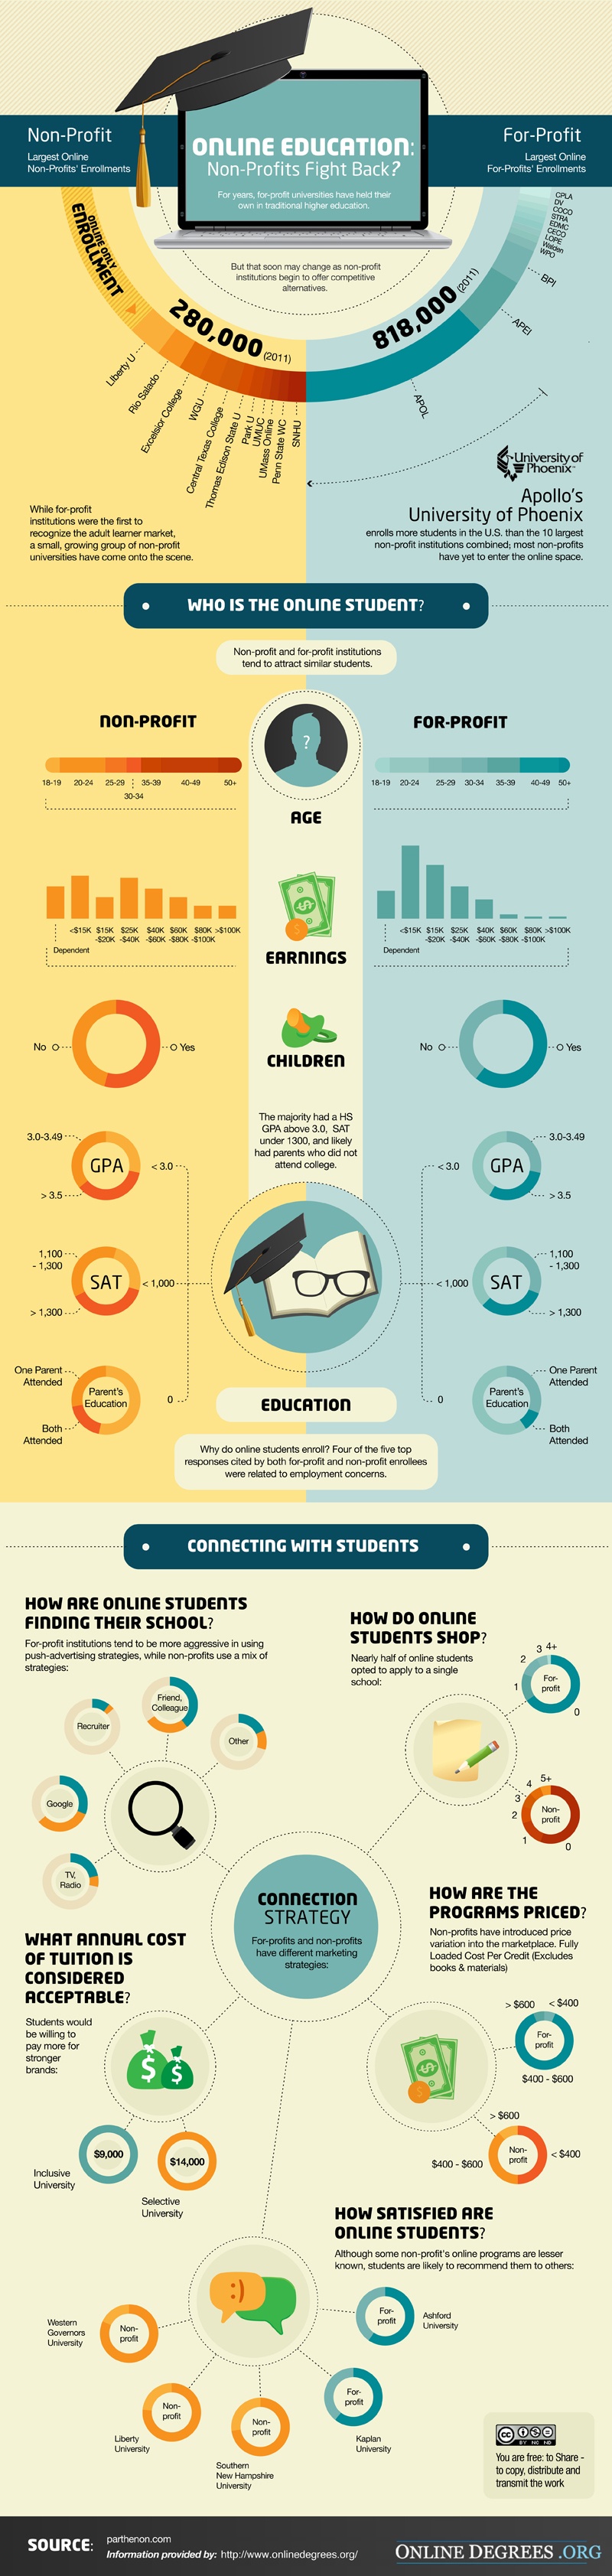 Non-Profit vs For-Profit Universities Infographic